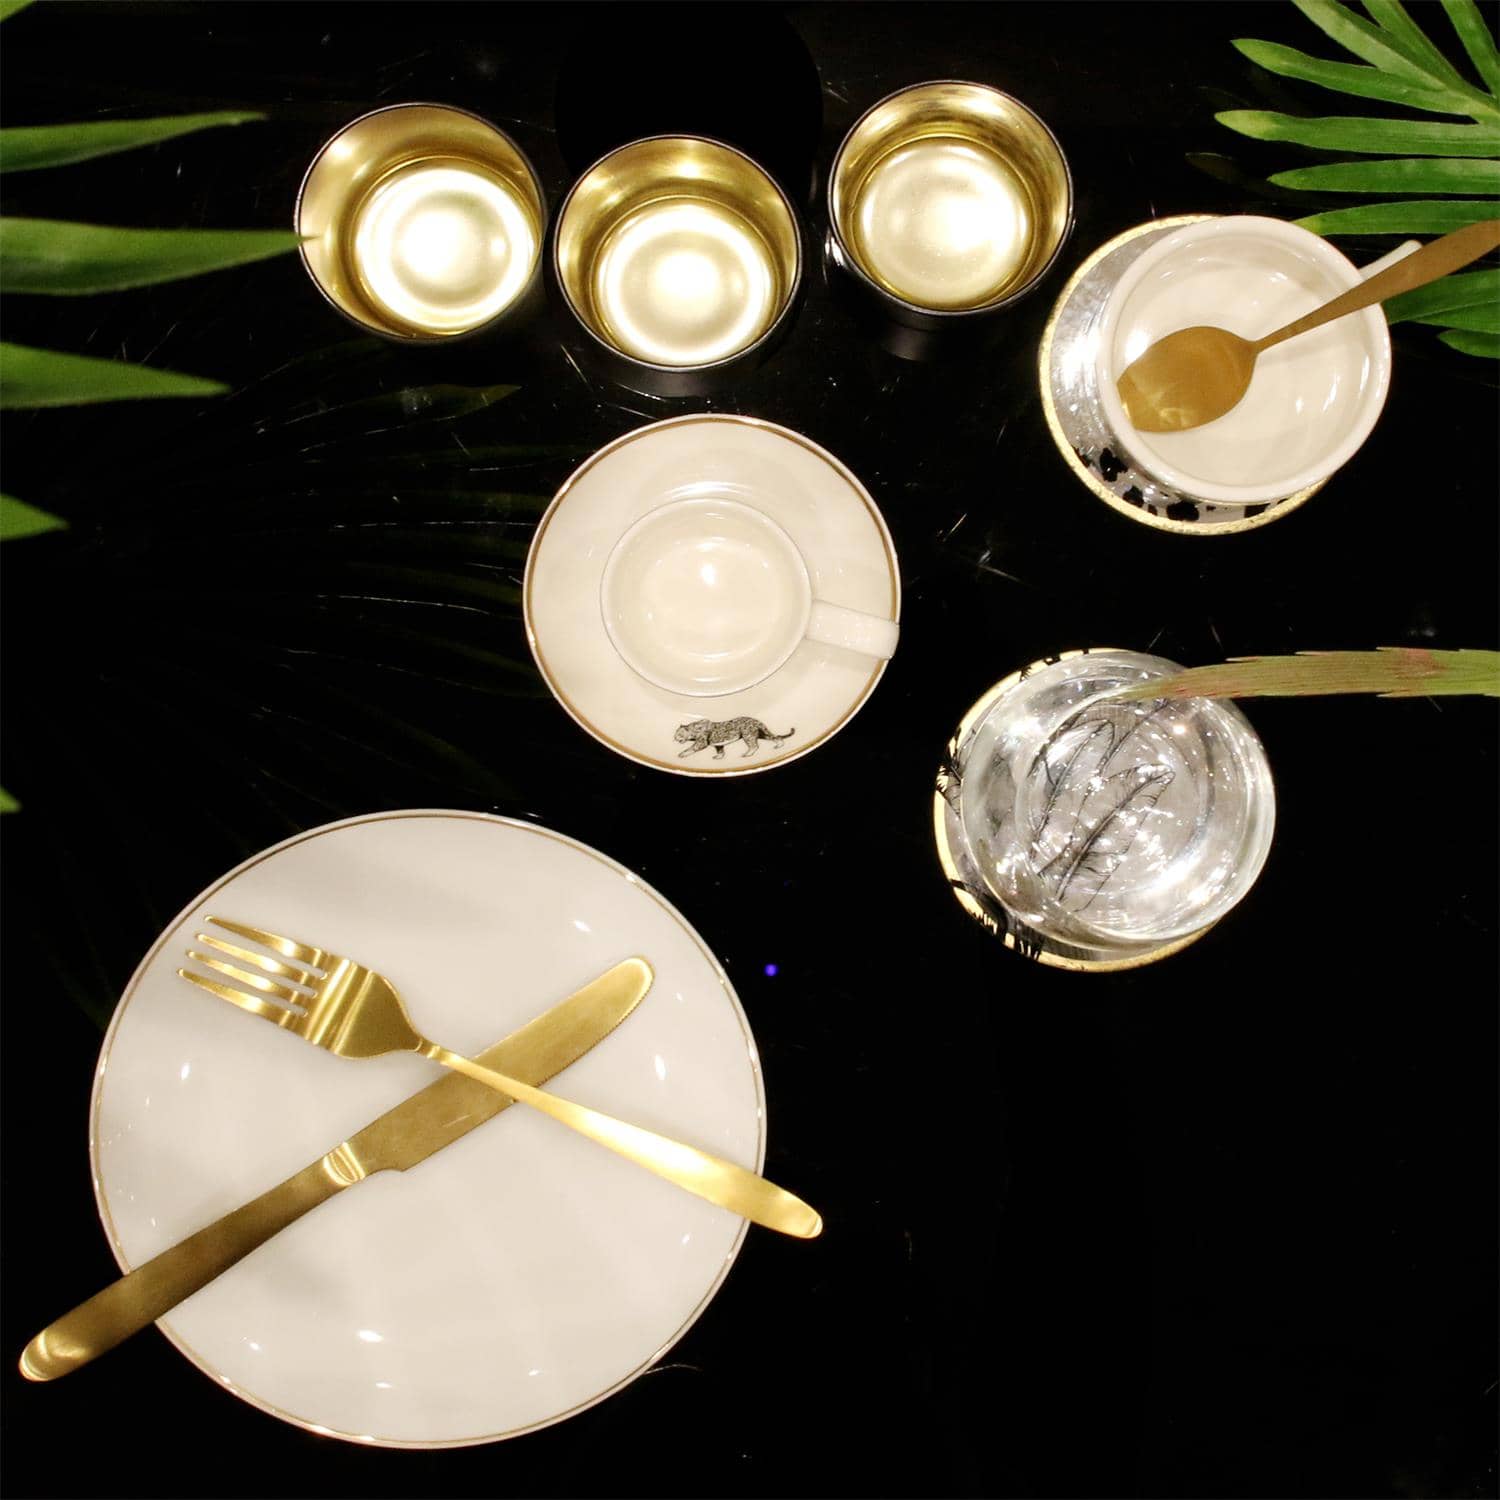 4goodz Classic Ontbijtbord Set van 6 Porselein 20 cm - Wit Goud rand